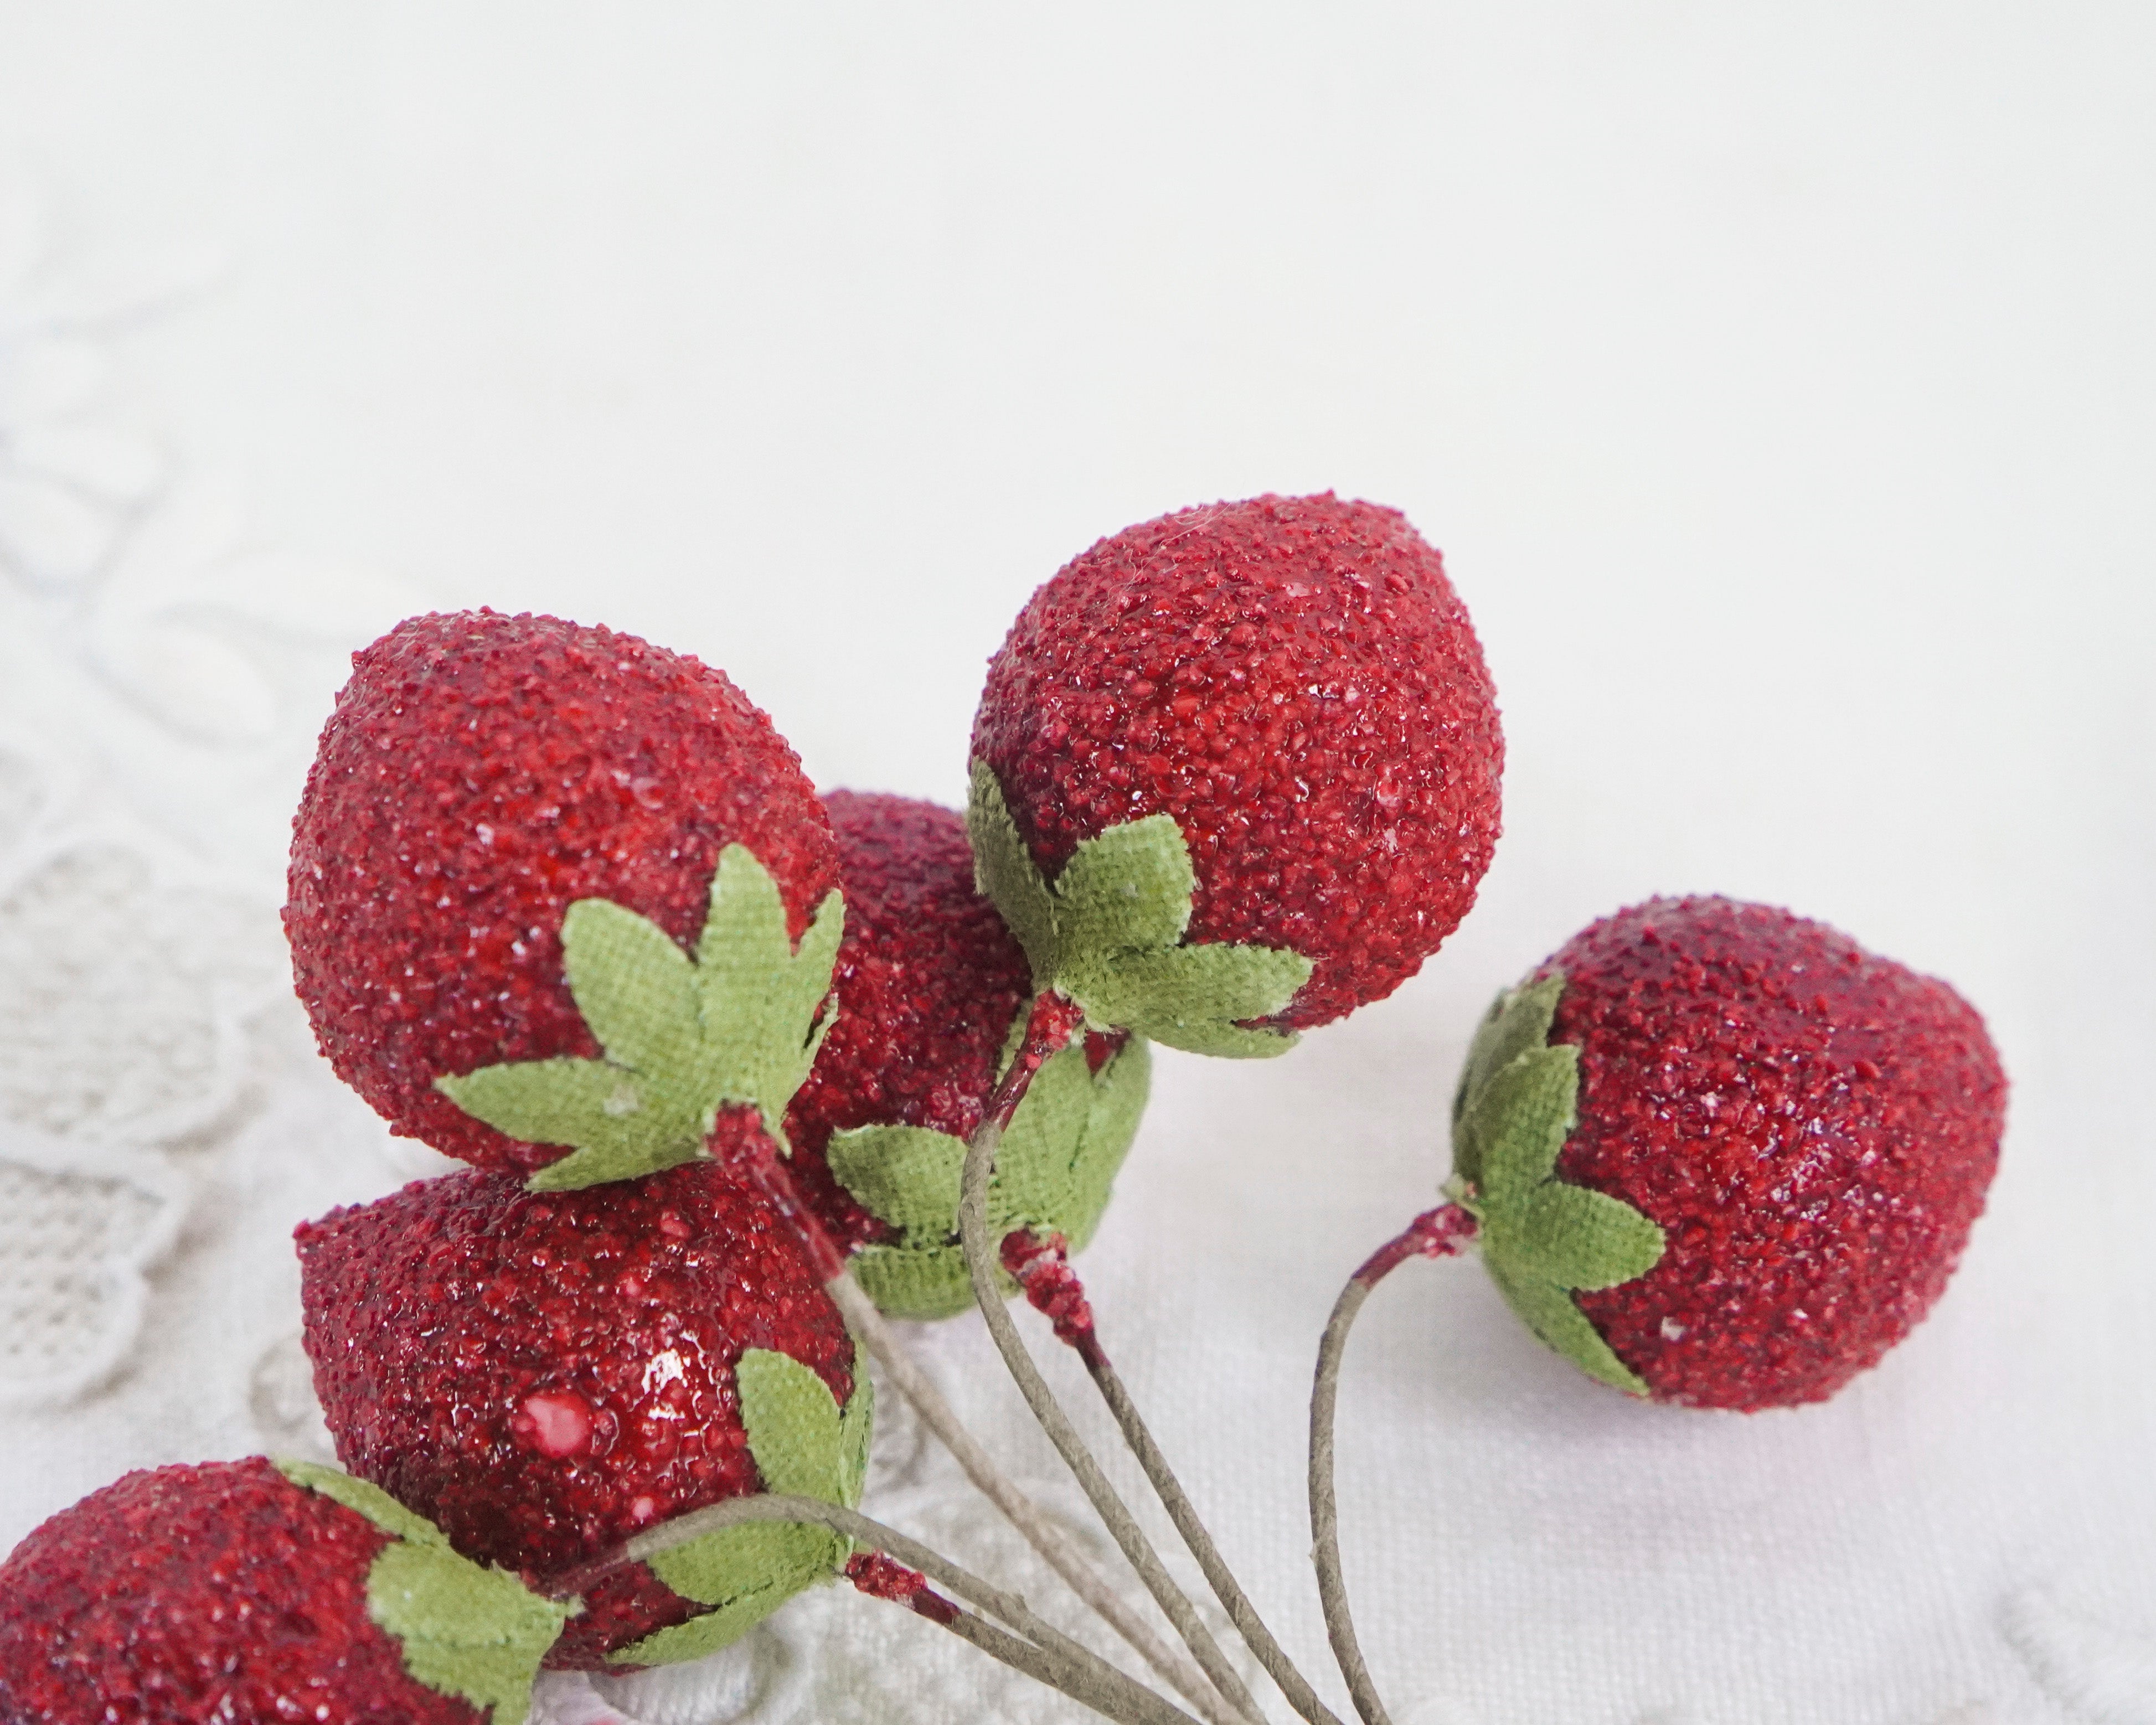 Spun Cotton Berries - Red Wild Strawberry Picks, 10 pcs.